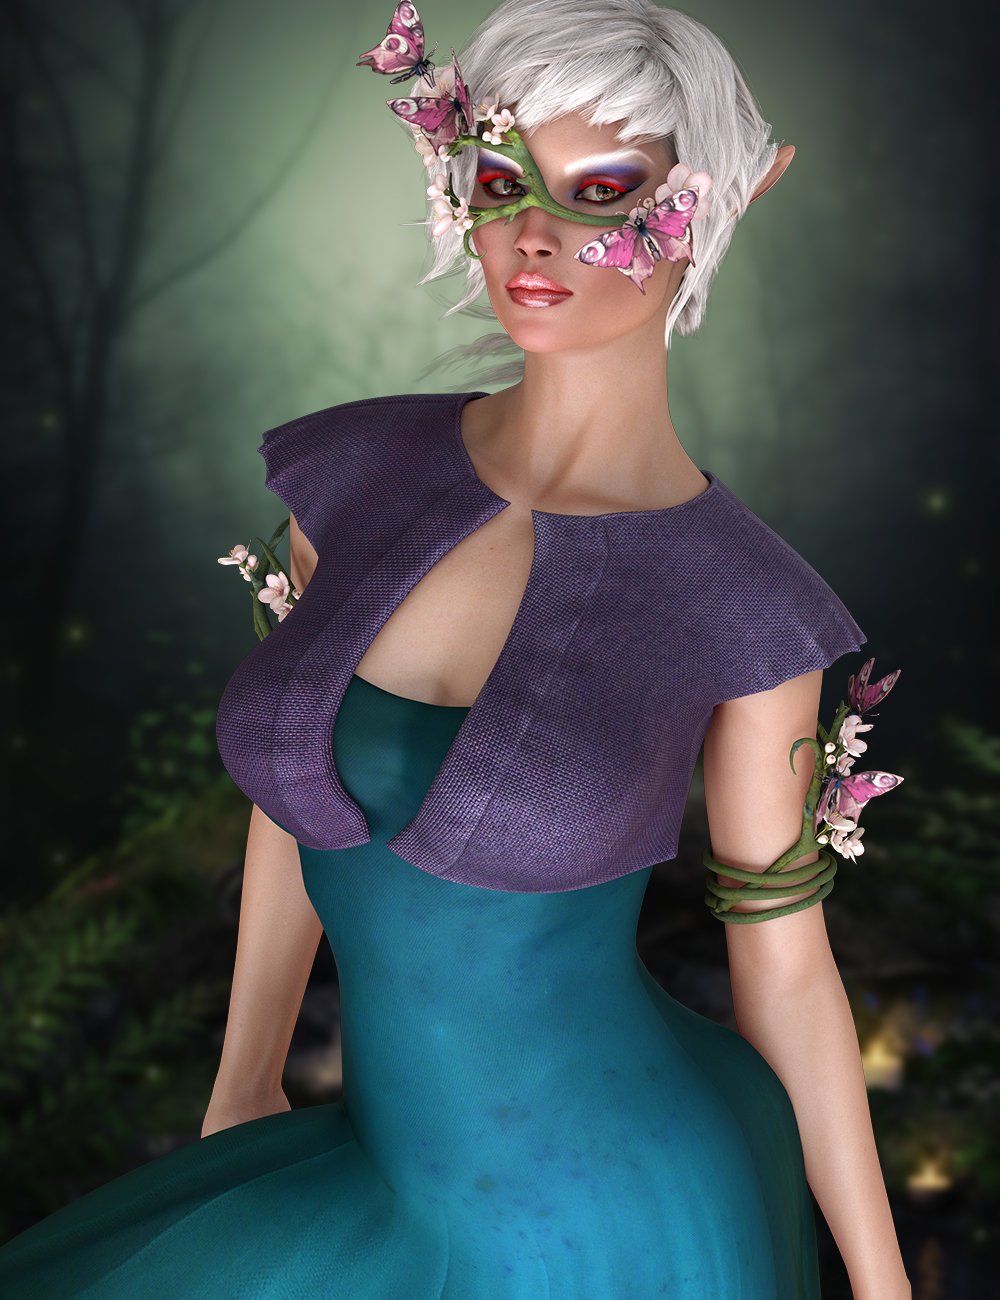 Aella for Genesis 8 Female by: hotlilme74, 3D Models by Daz 3D